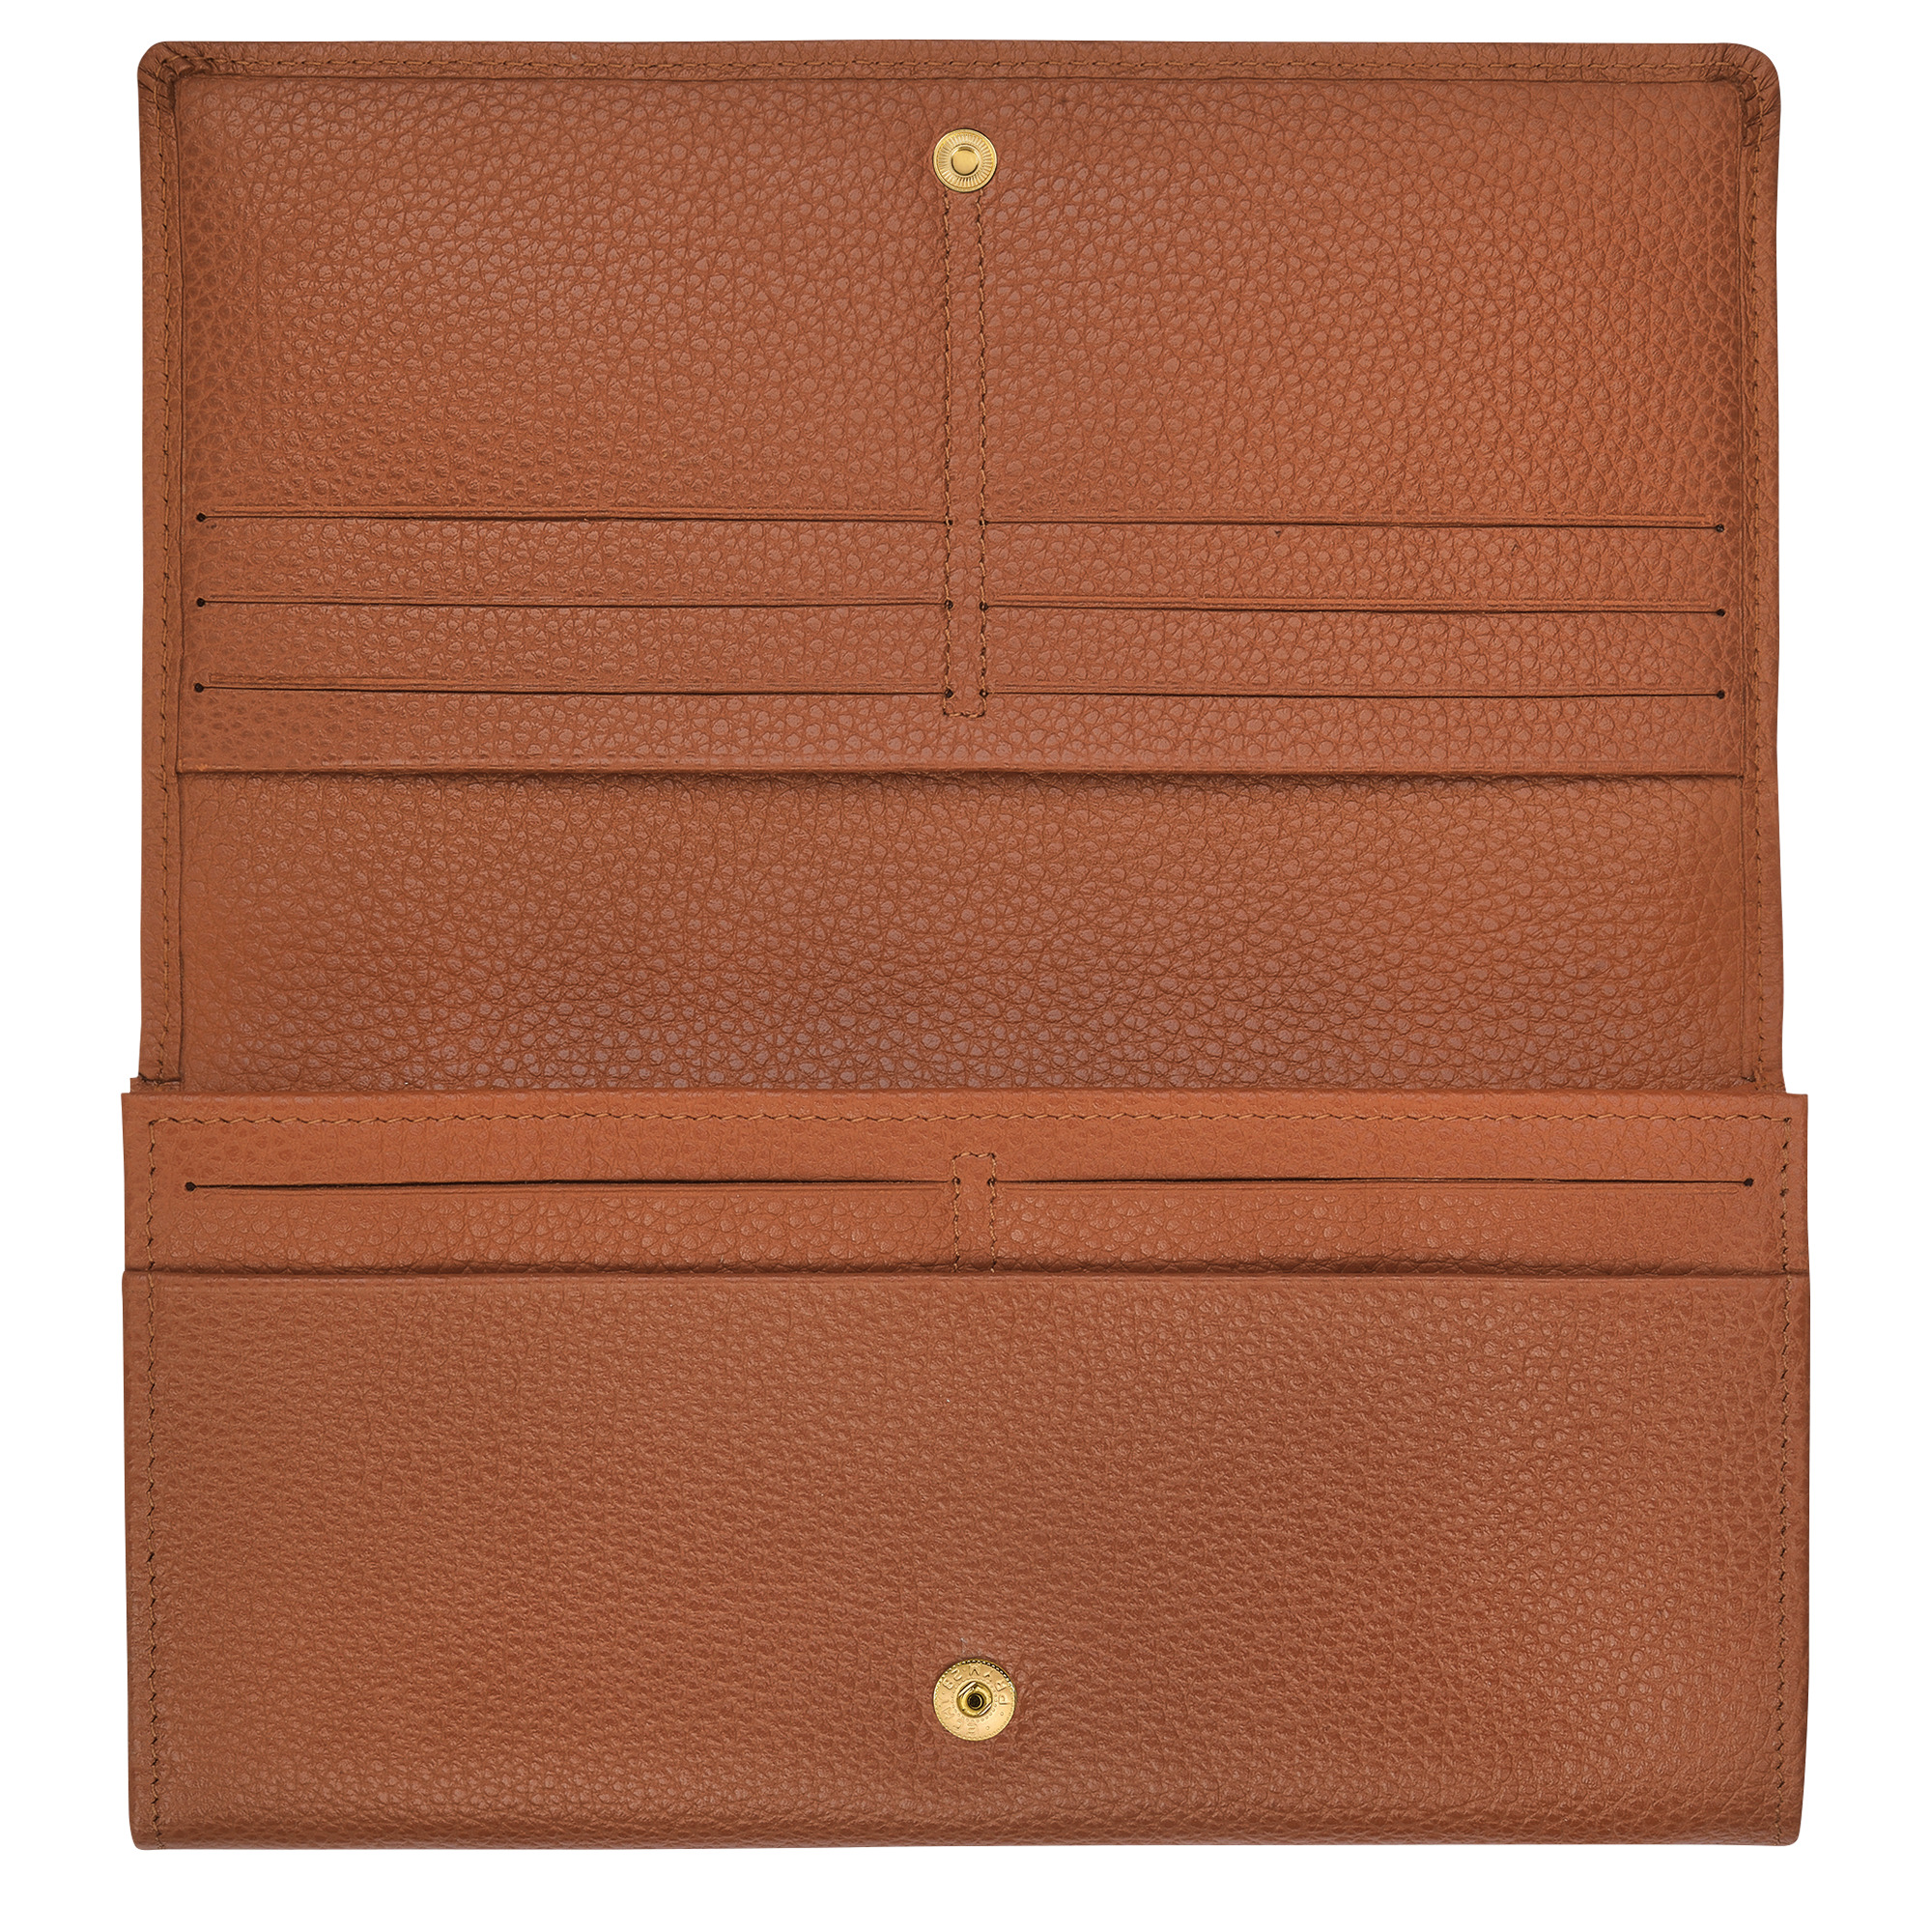 Le Foulonné Continental wallet Caramel - Leather - 2